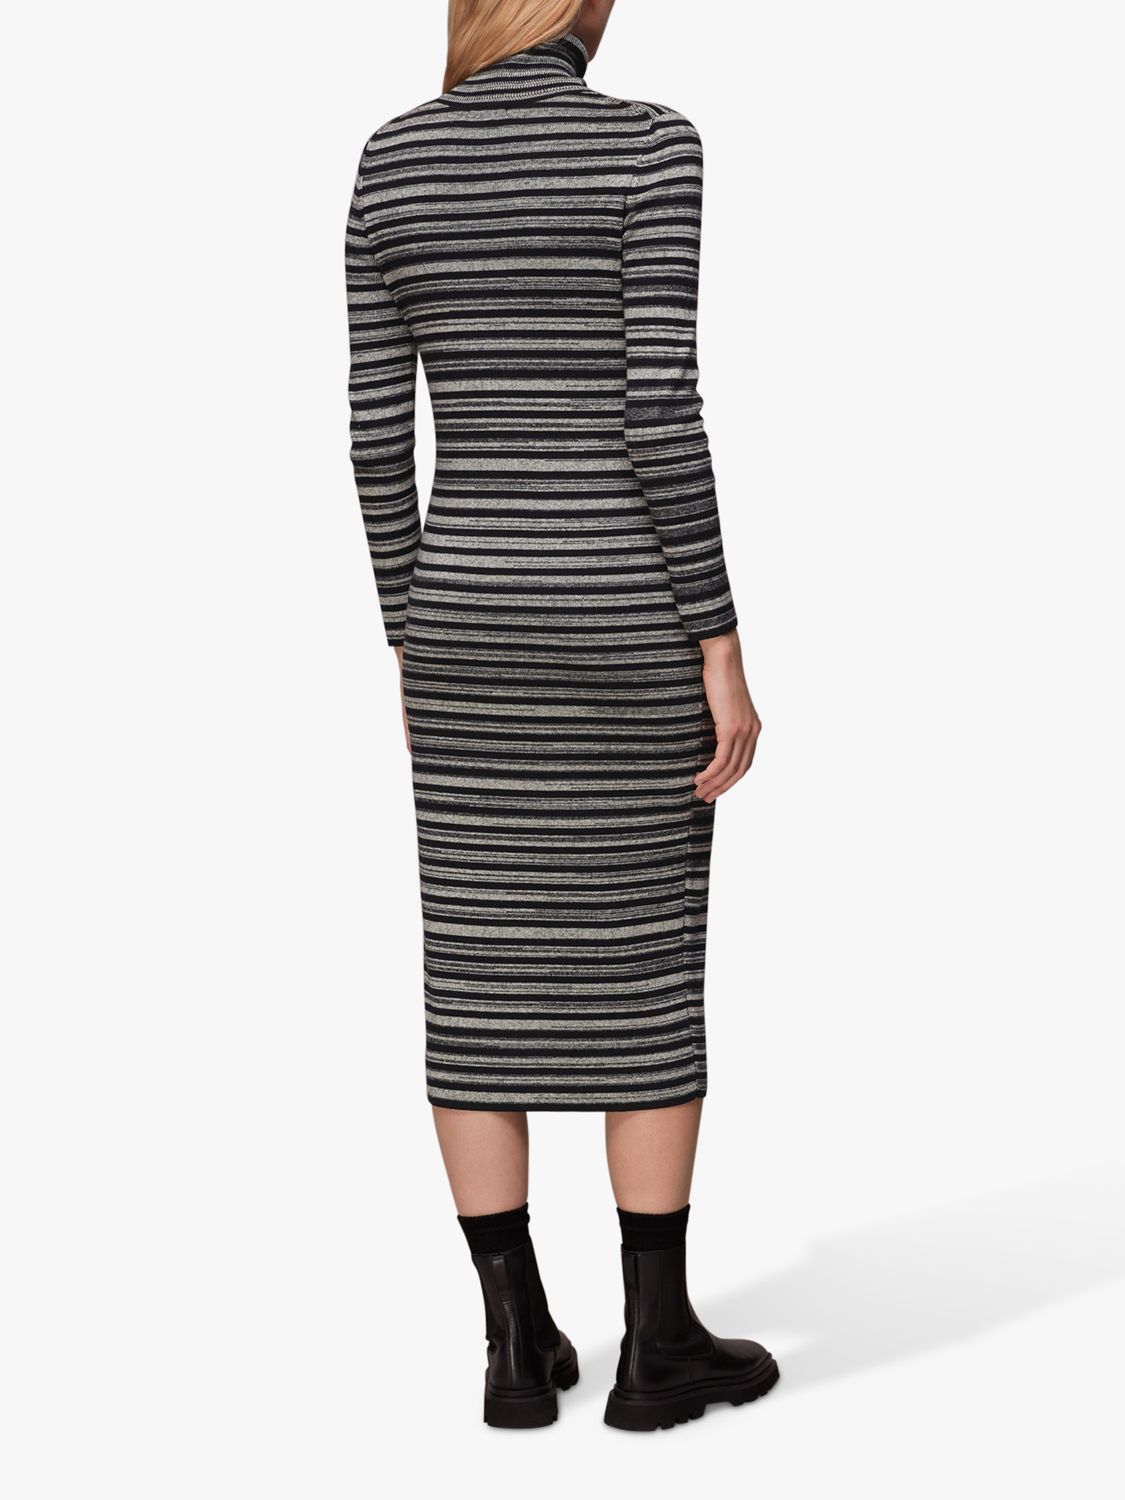 Whistles Organic Cotton Blend Stripe Midi Dress, Black/Multi, 6